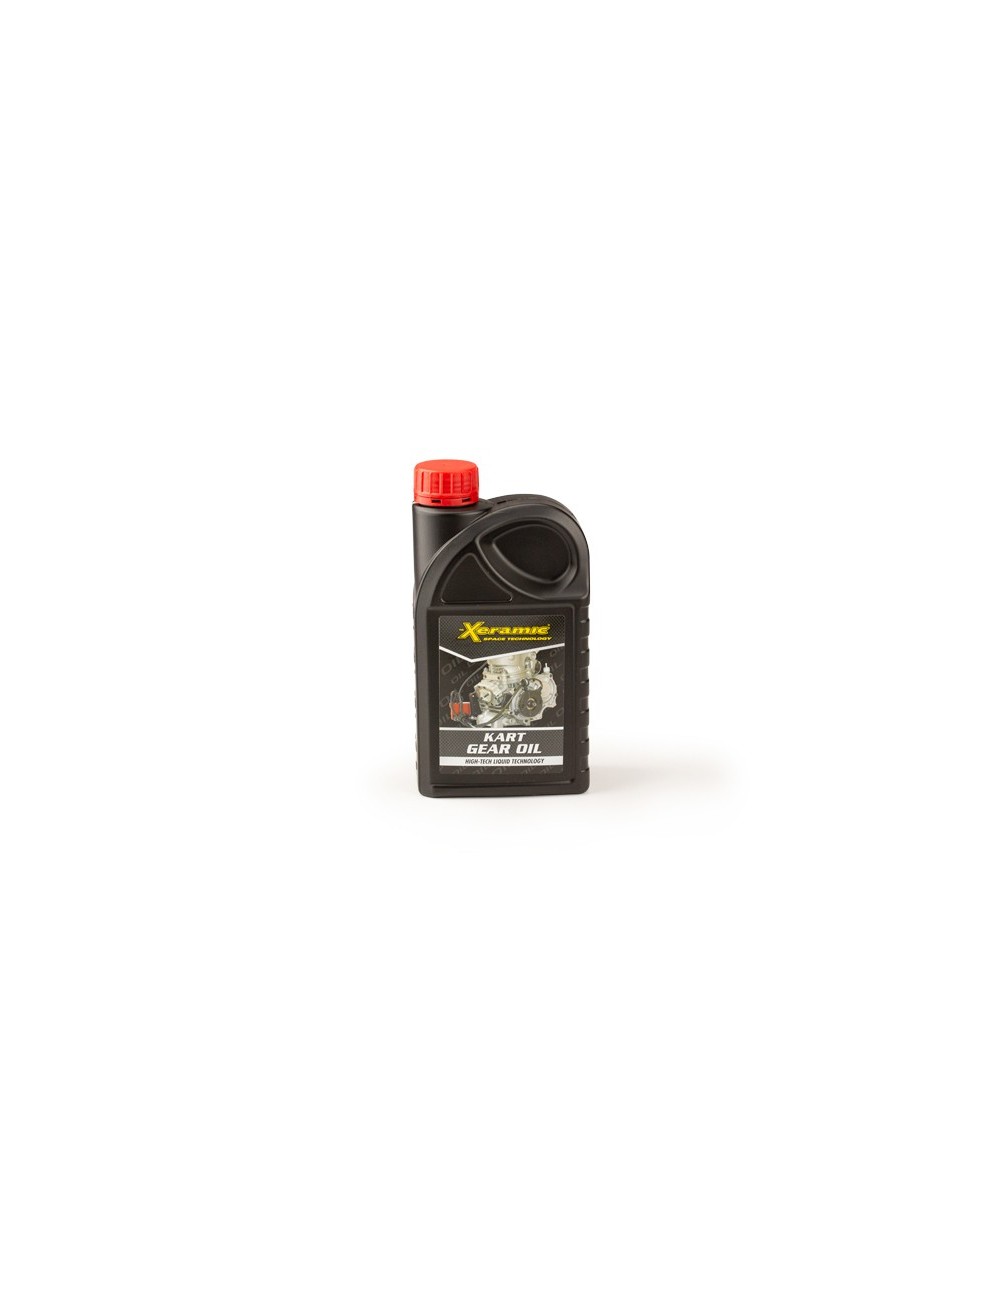 Xeramic Kart Gear Oil 1 litre